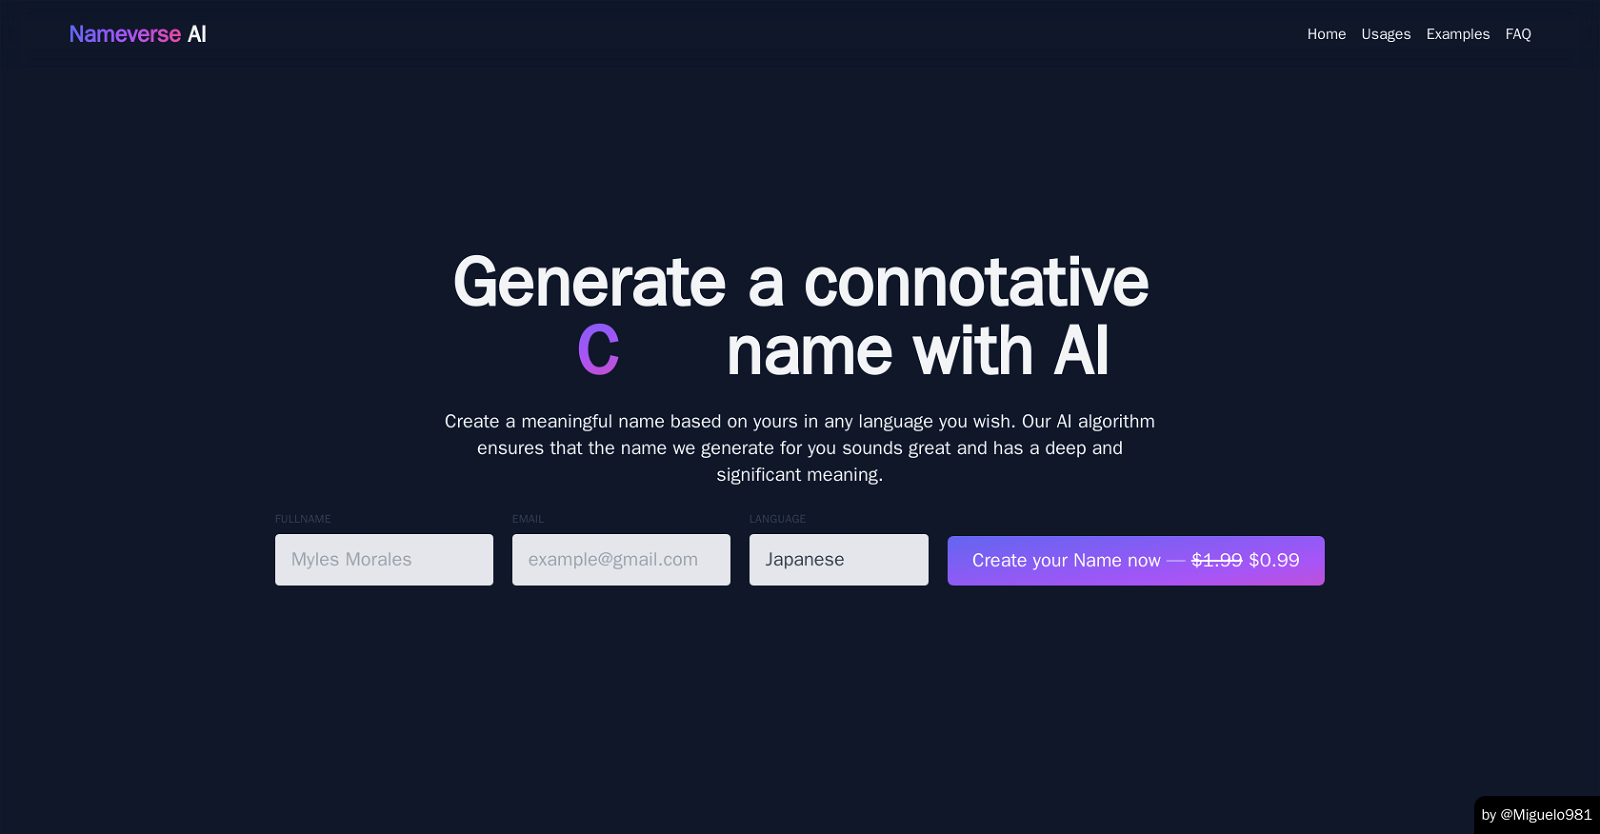 Nameverse AI website